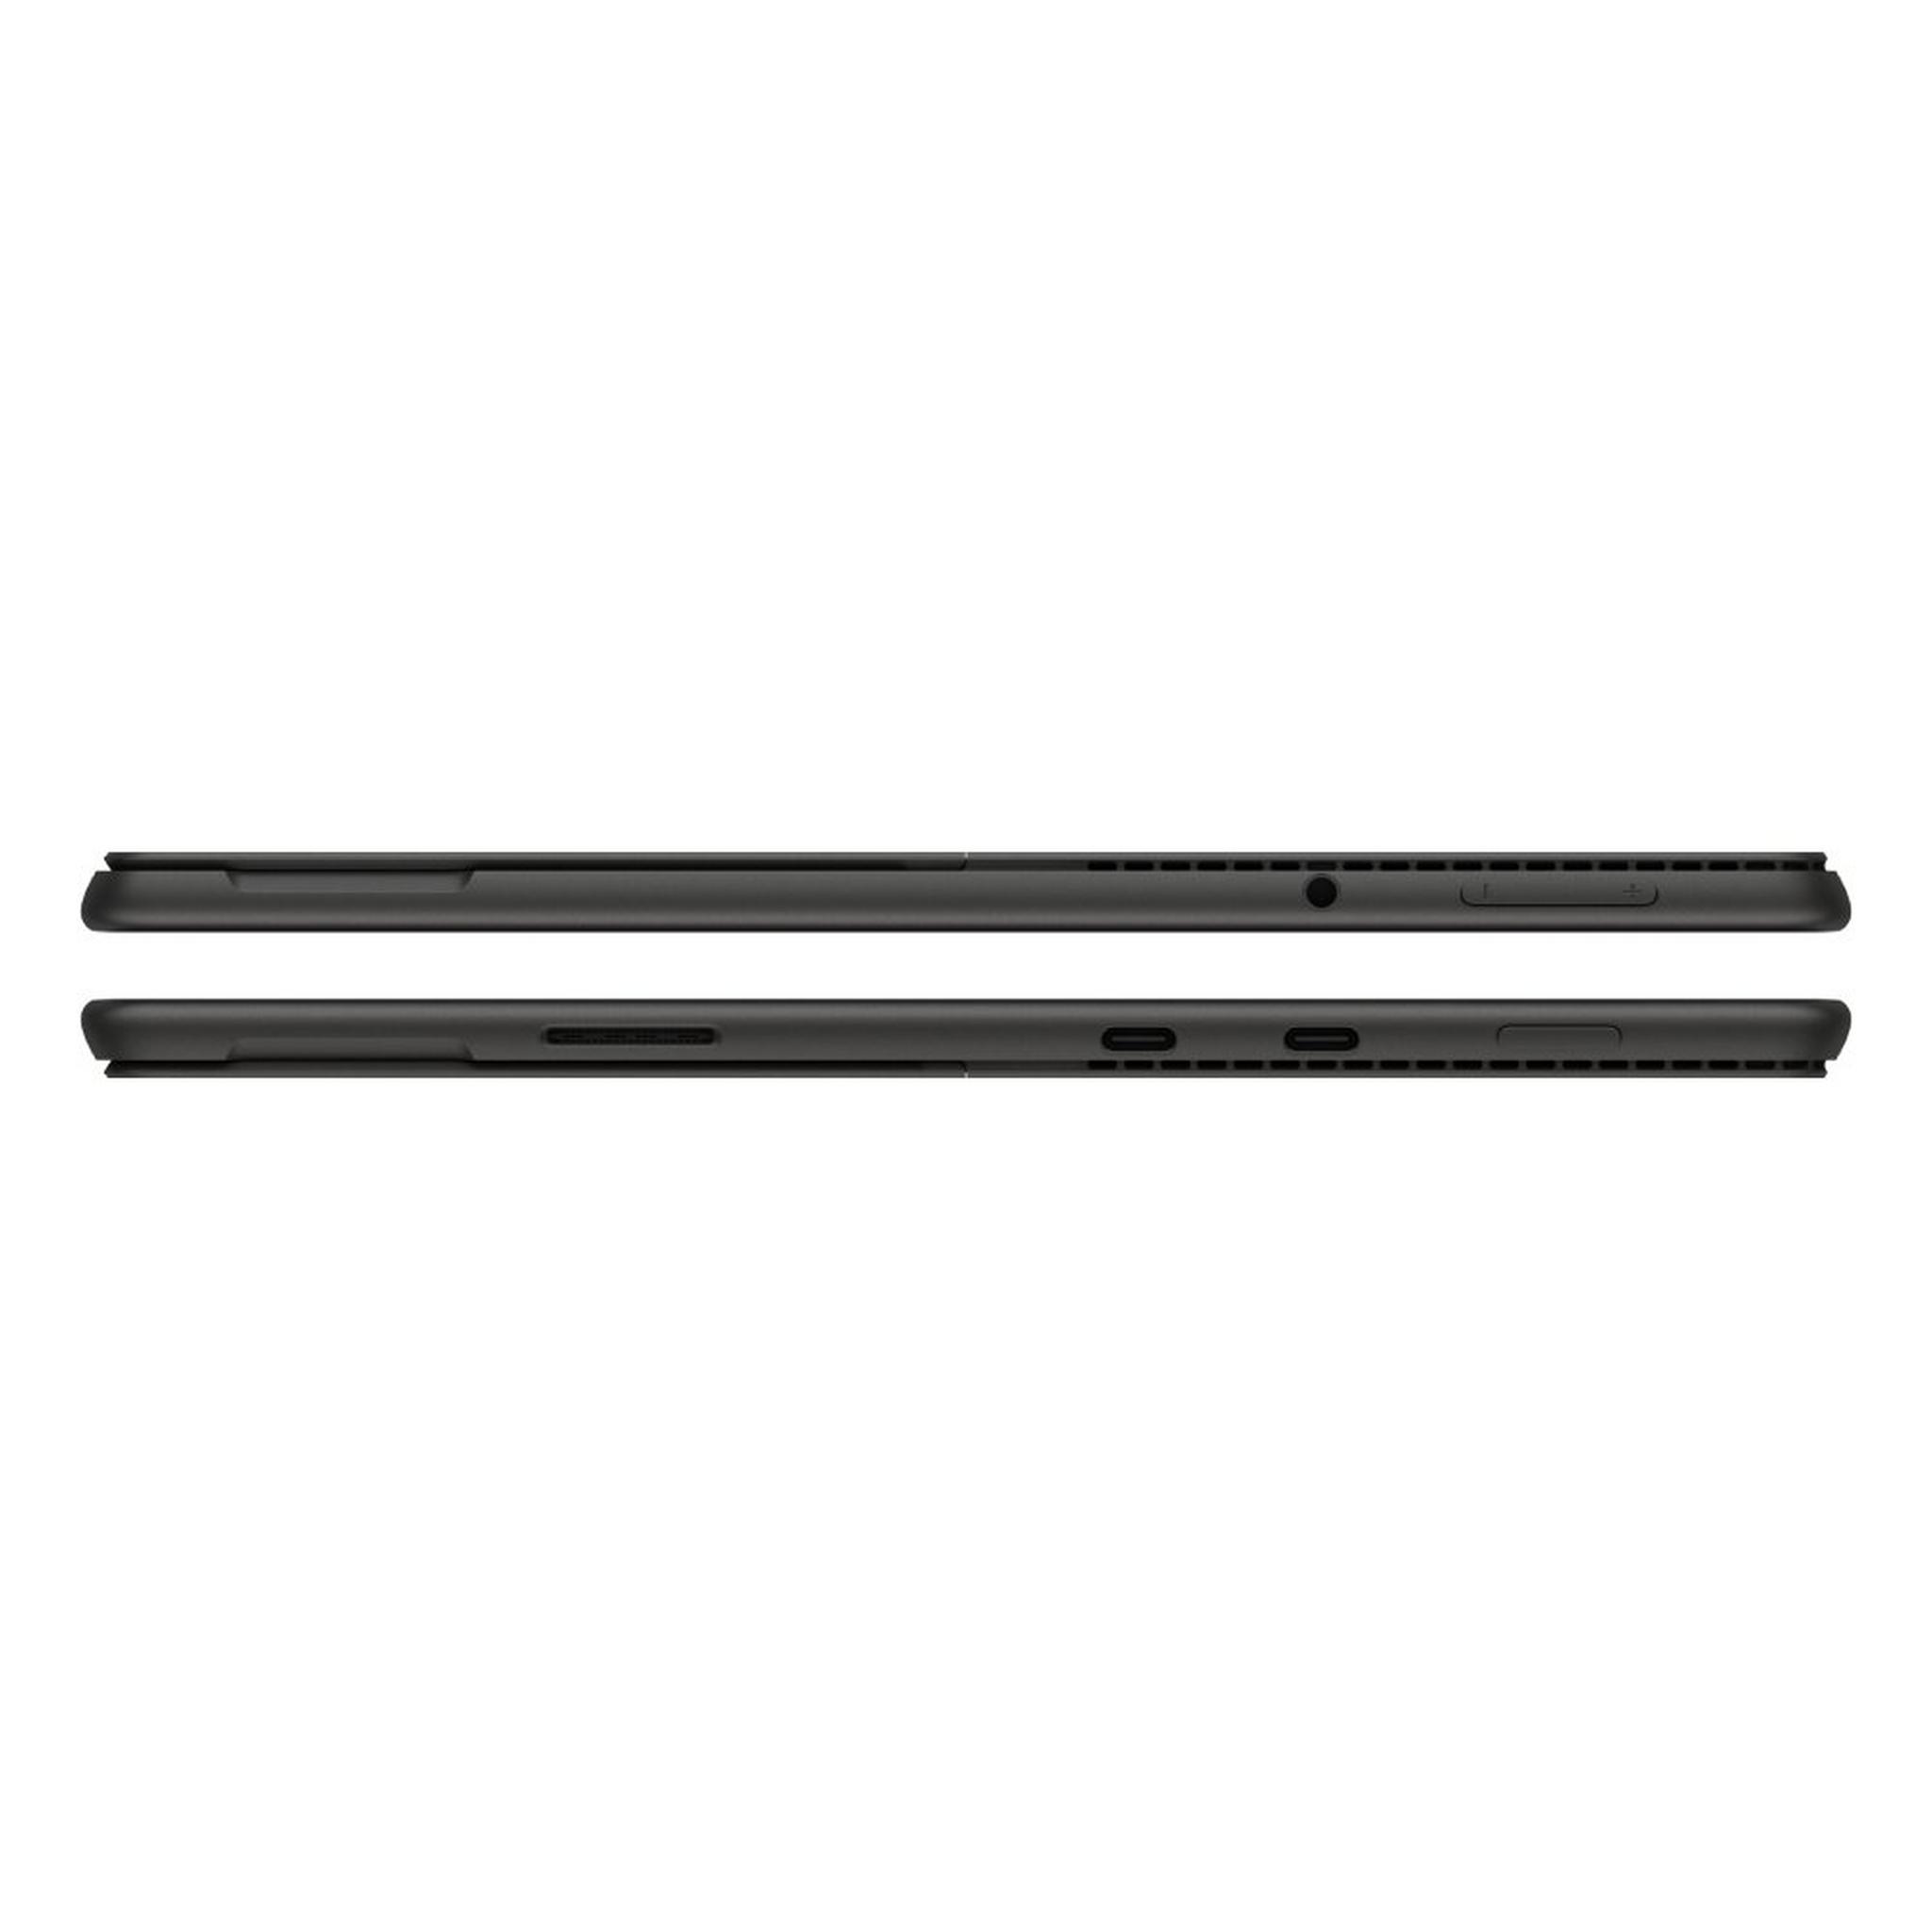 Microsoft Surface Pro 8 Intel Core i7 11th Gen, 16GB RAM, 512GB SSD, 13-inch Convertible Laptop - Graphite